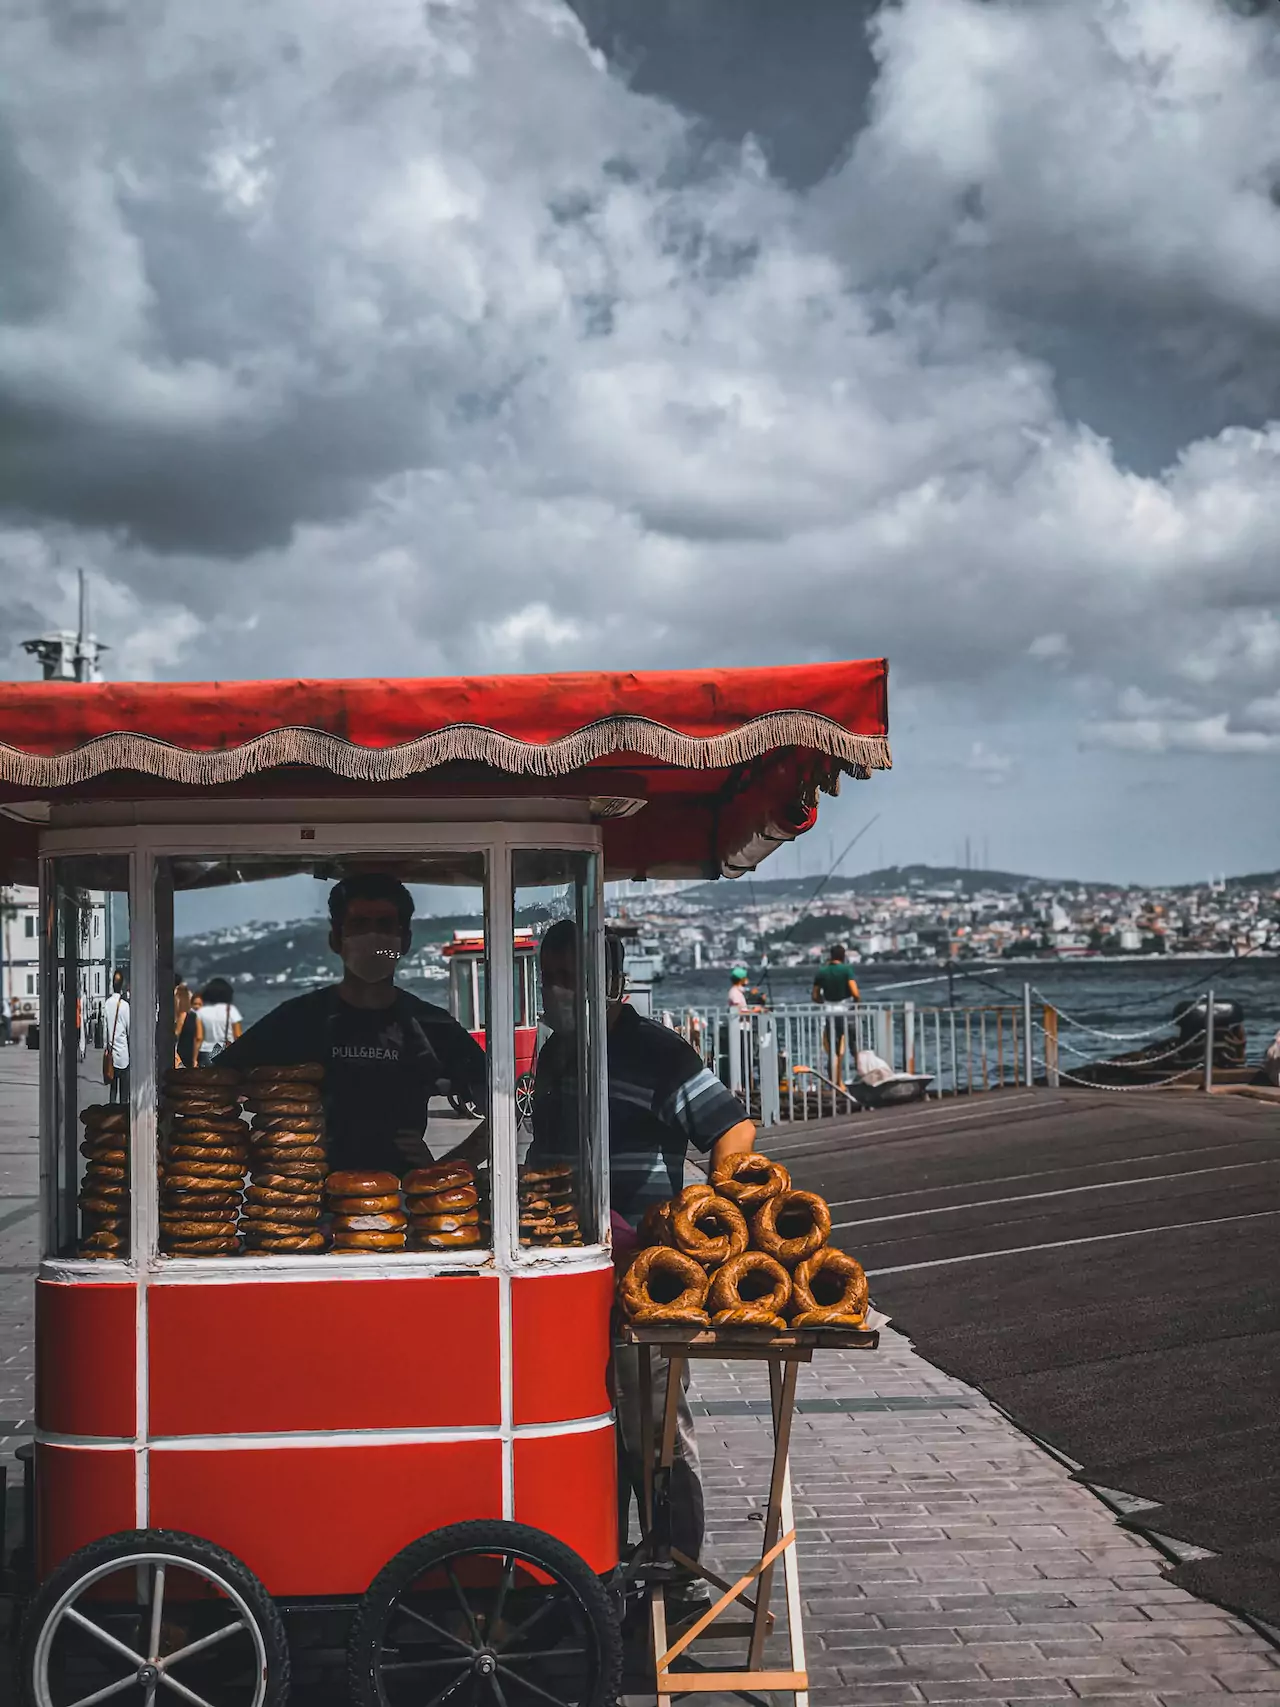 istanbul tourist tips